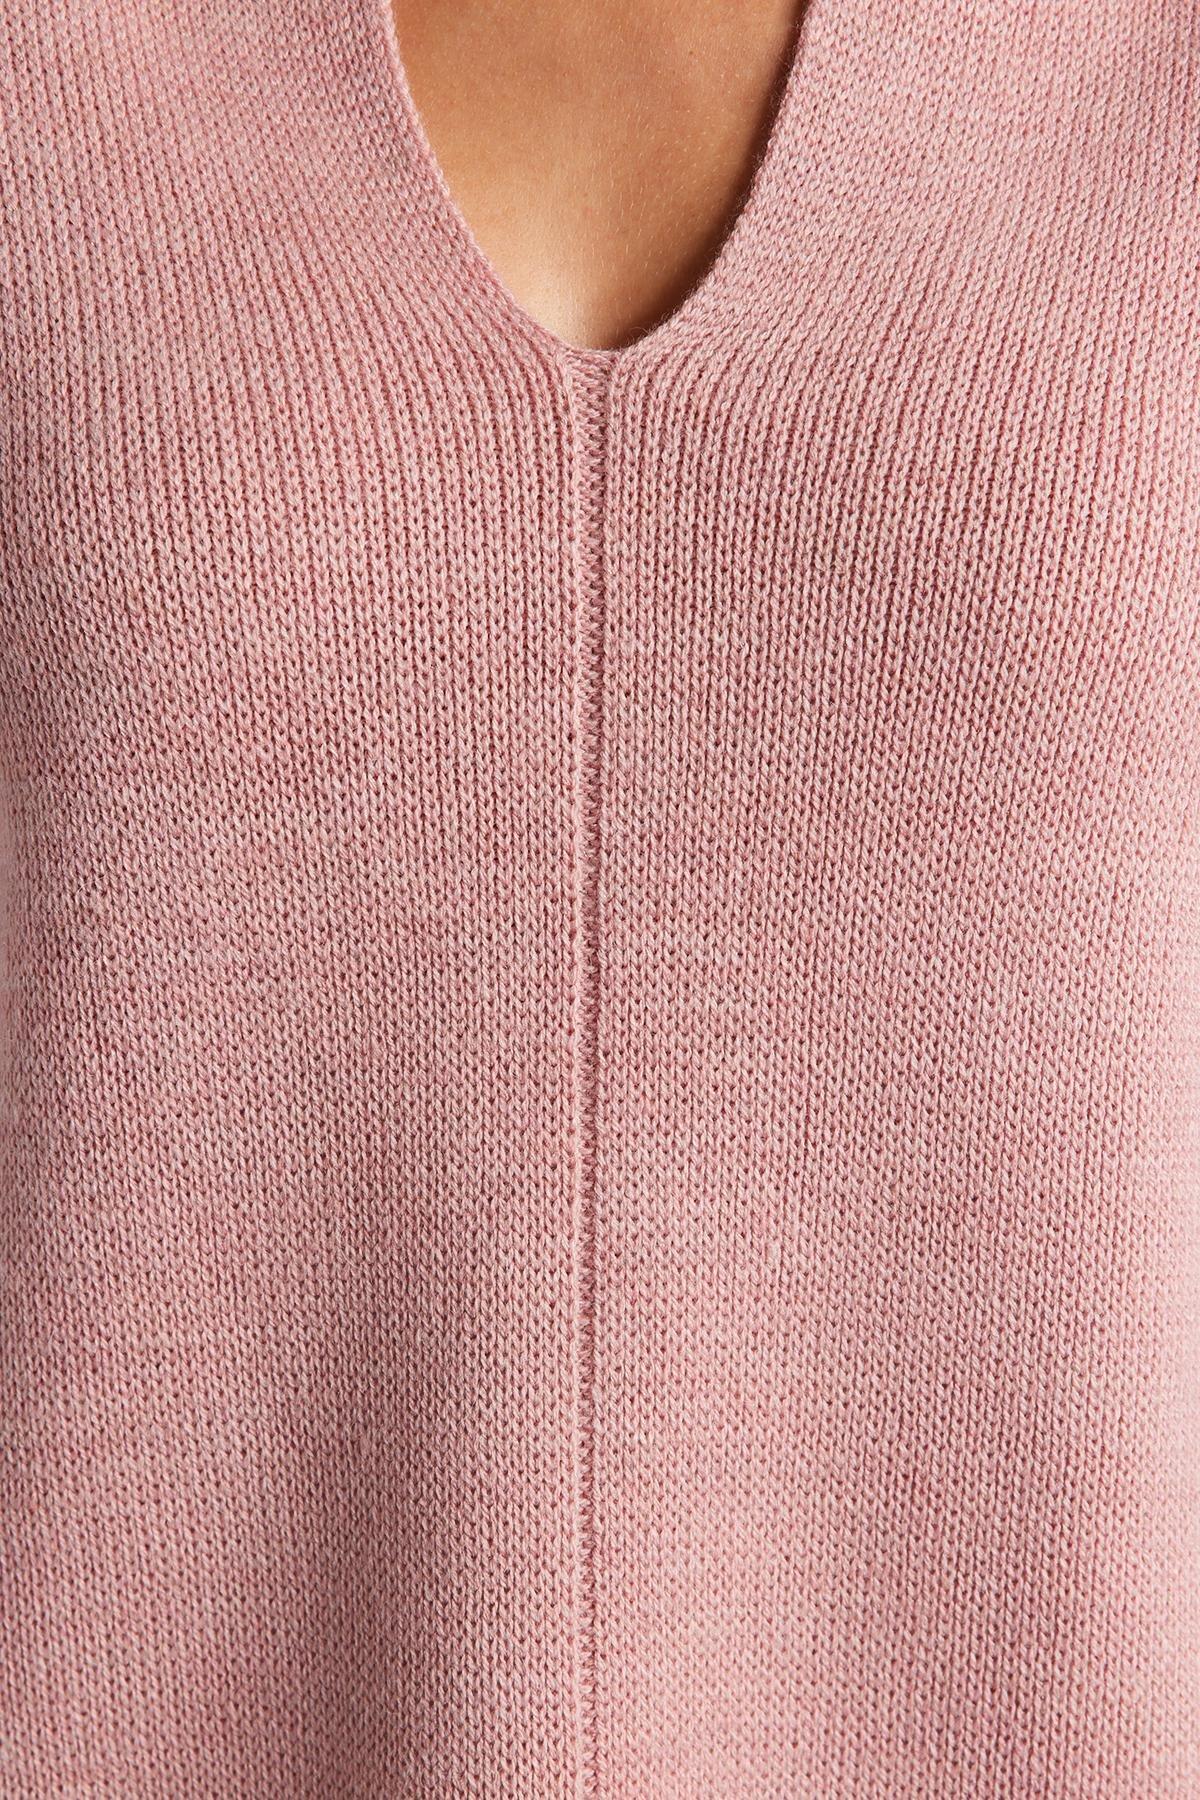 Trendyol - Pink V-Neck Knitwear Sweater